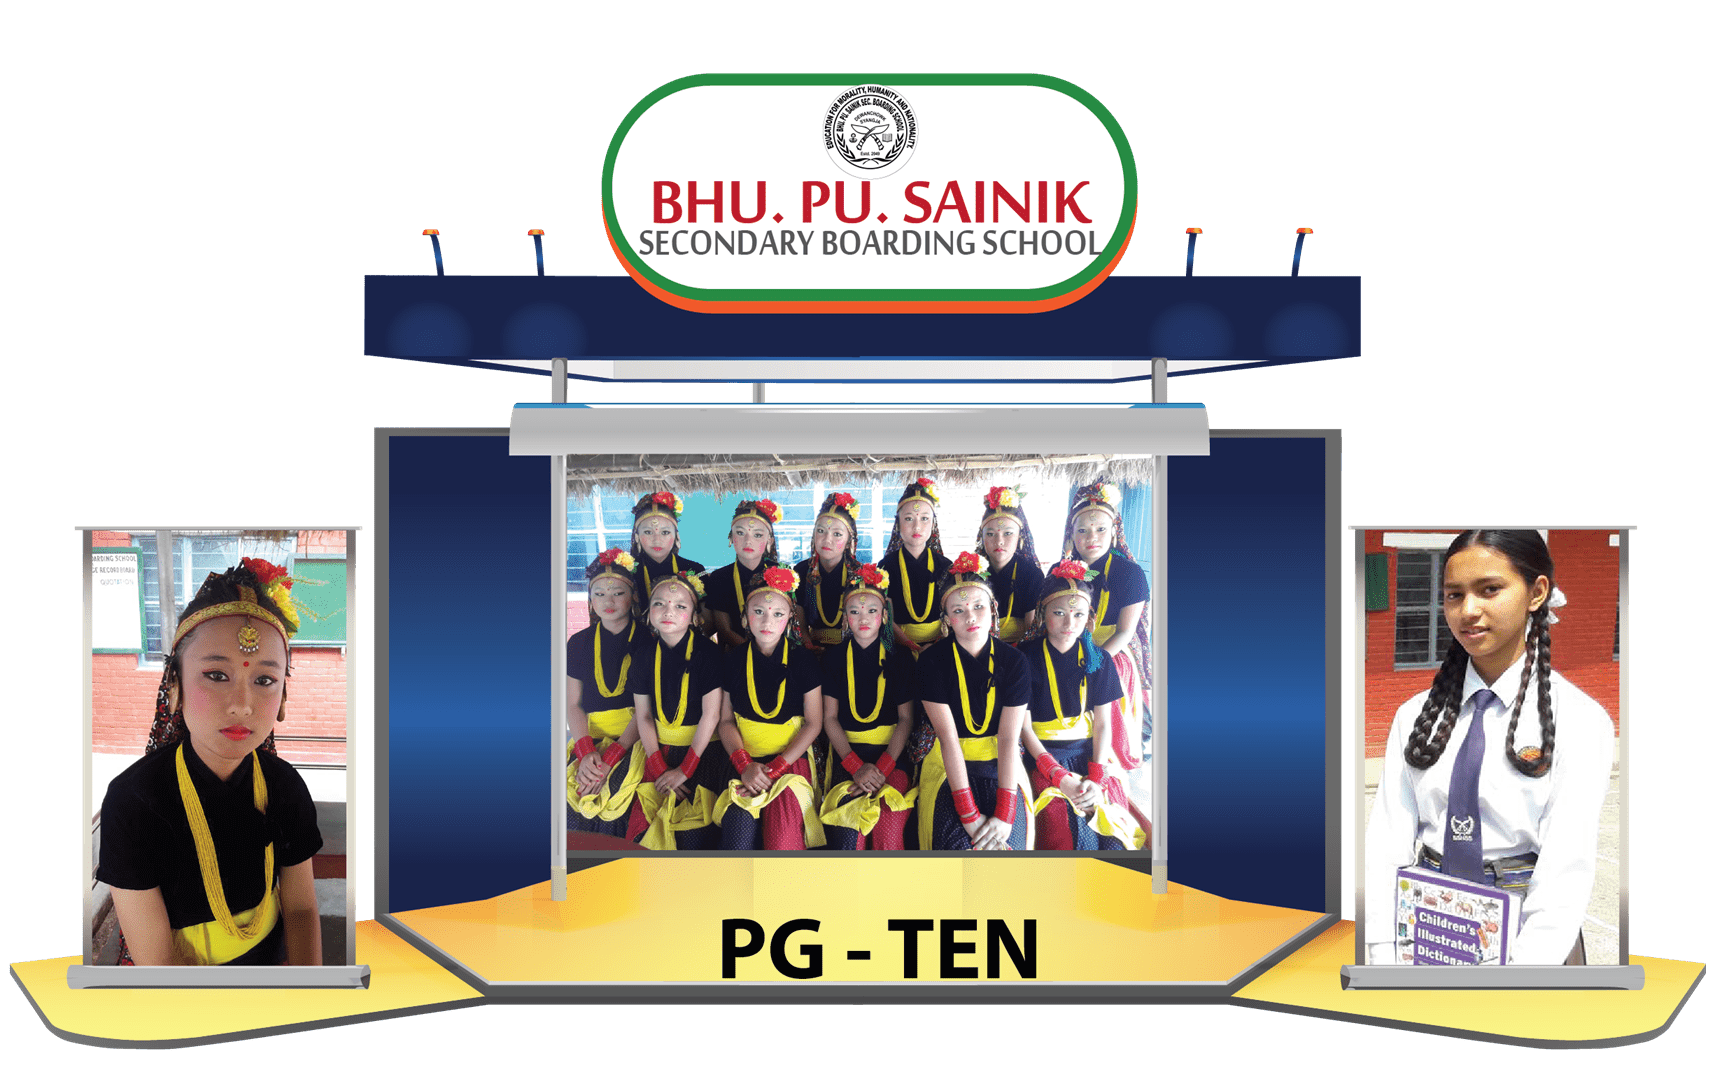 Bhu.Pu. Sainik Secondary Boarding School